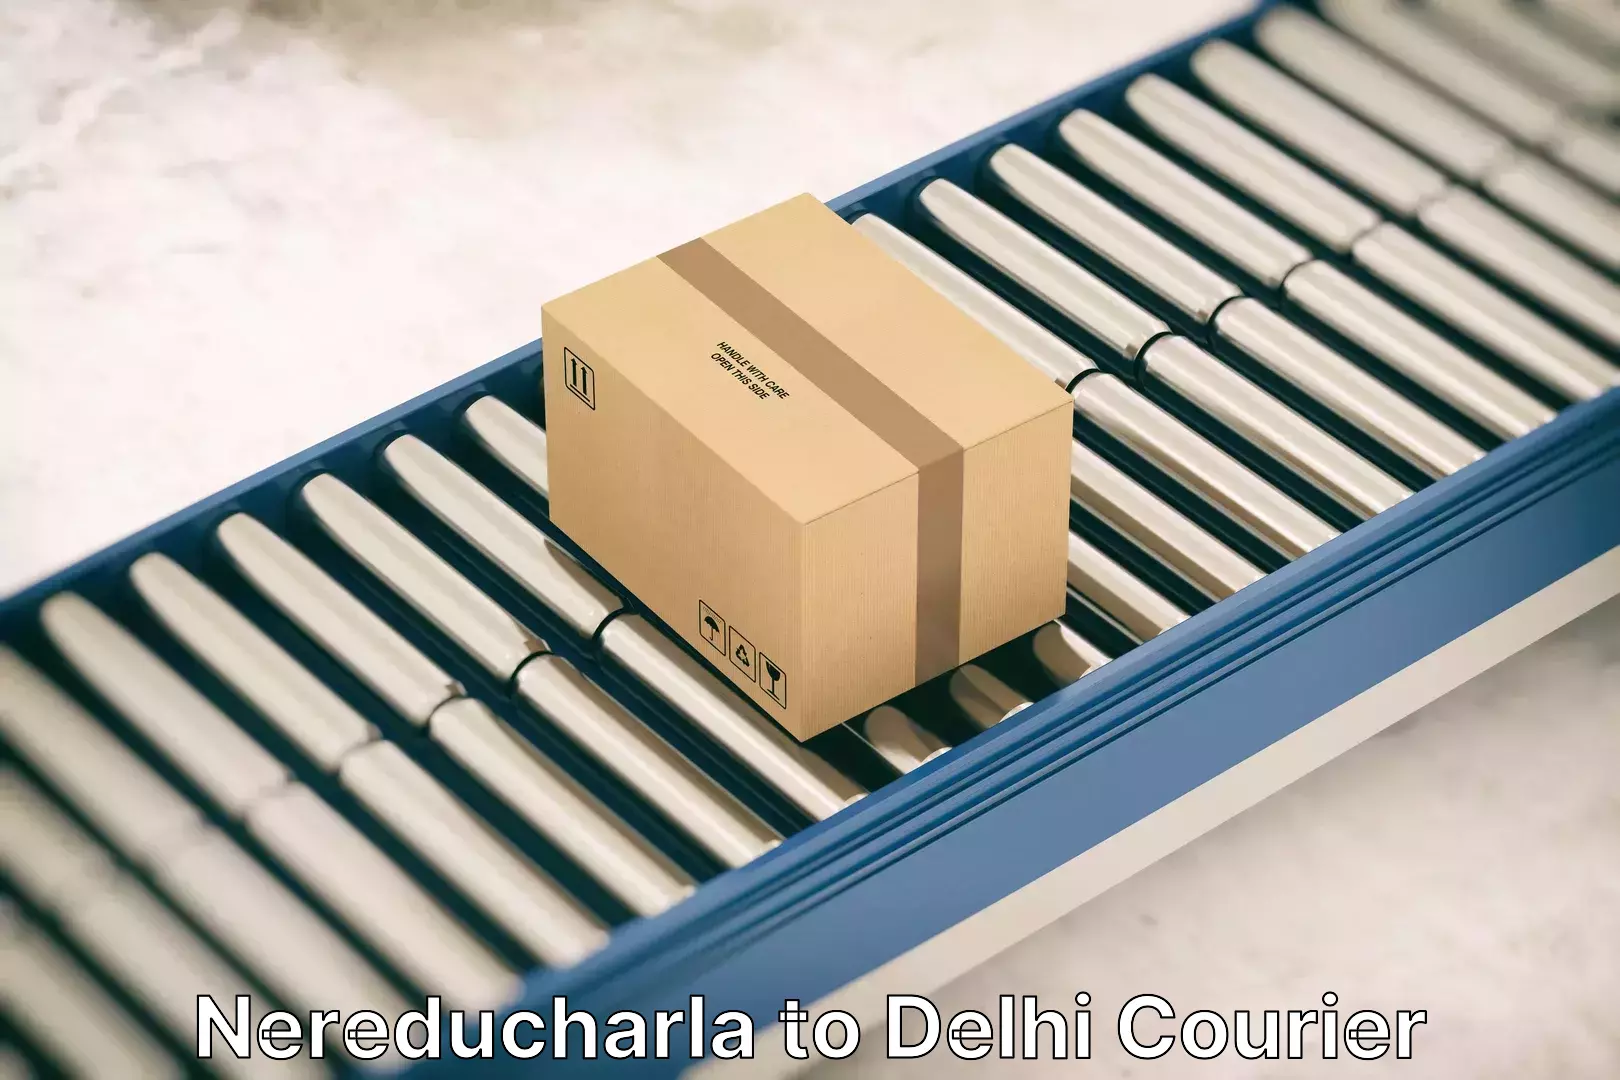 Professional moving company Nereducharla to Delhi